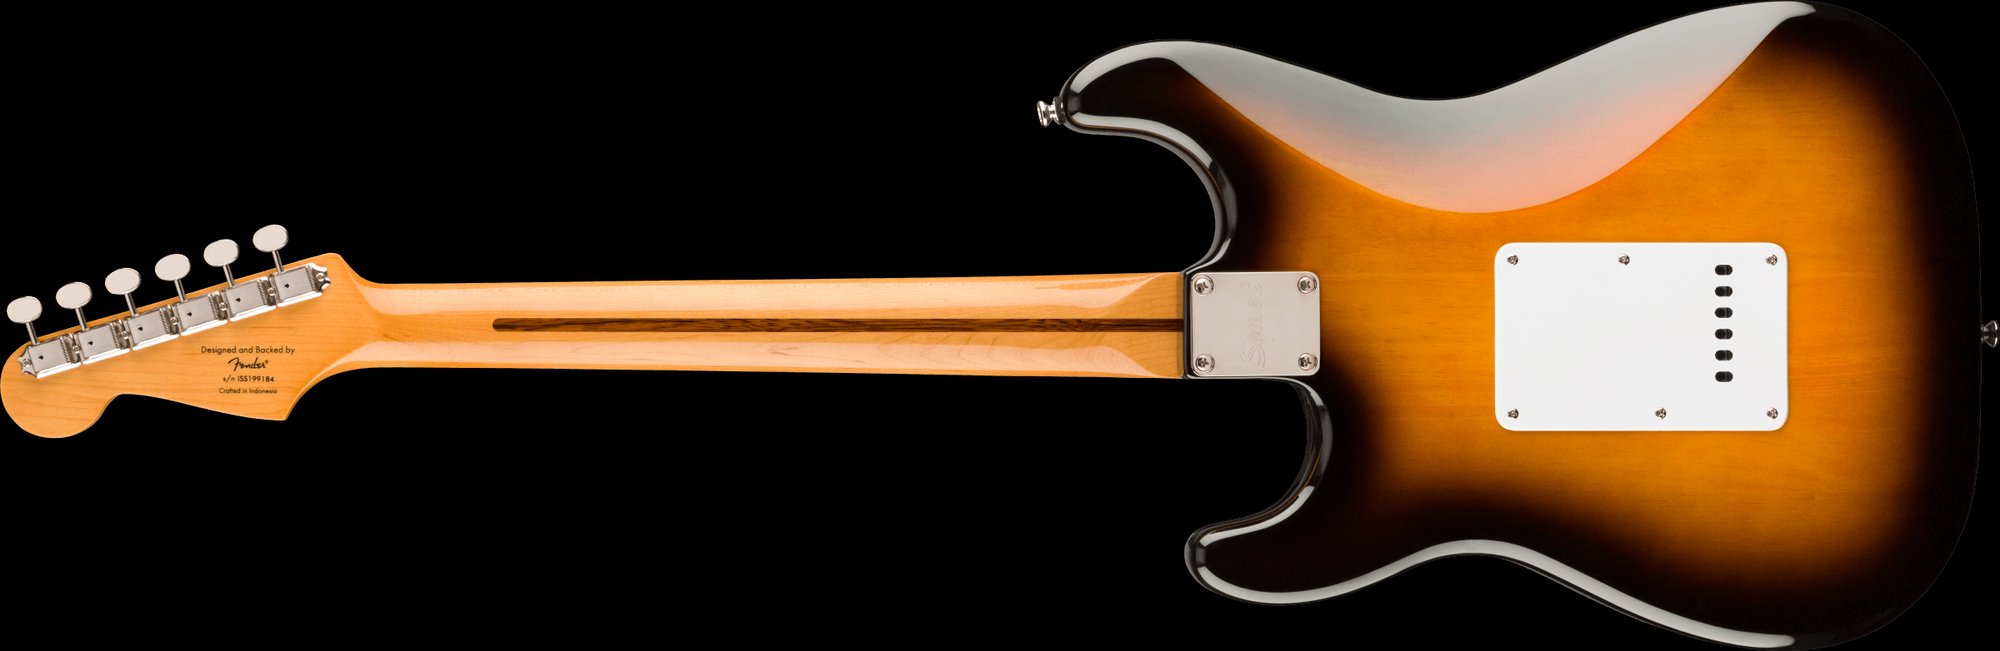 Squier Classic Vibe '50s Stratocaster Maple Fingerboard 2-Color Sunburst Electric Guitar